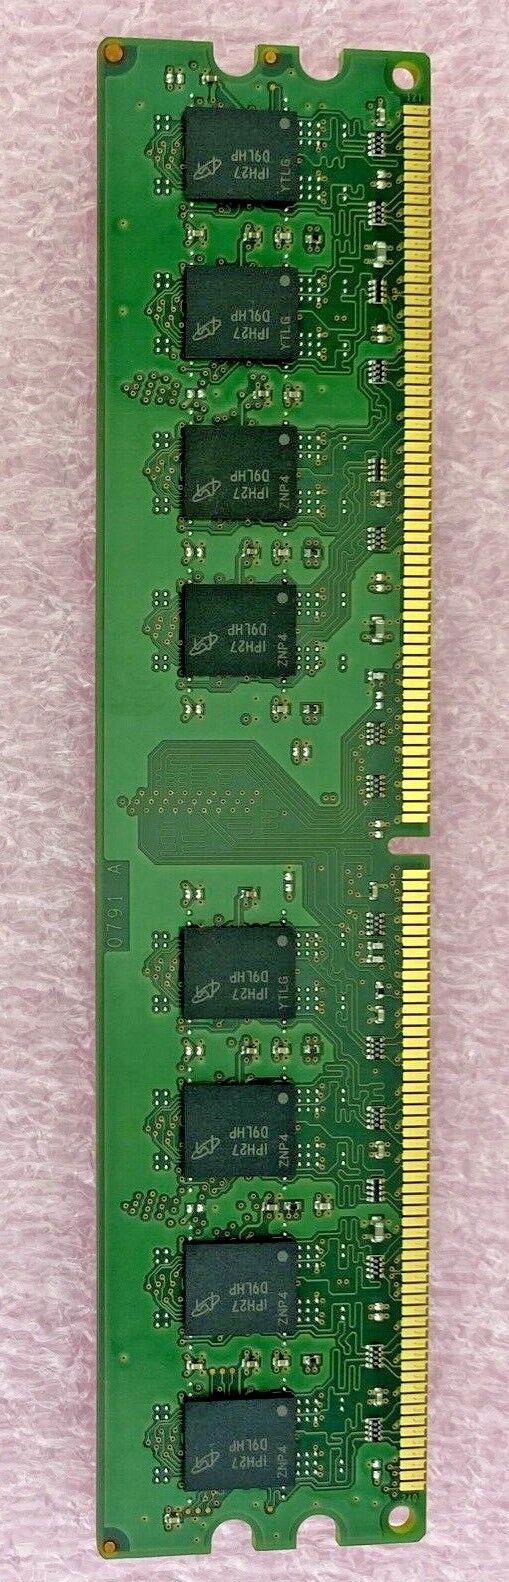 2GB Micron MT16HTF25664AZ-667H1 PC2-5300 667MHz DDR2 DIMM 256Mx6 RAM memory